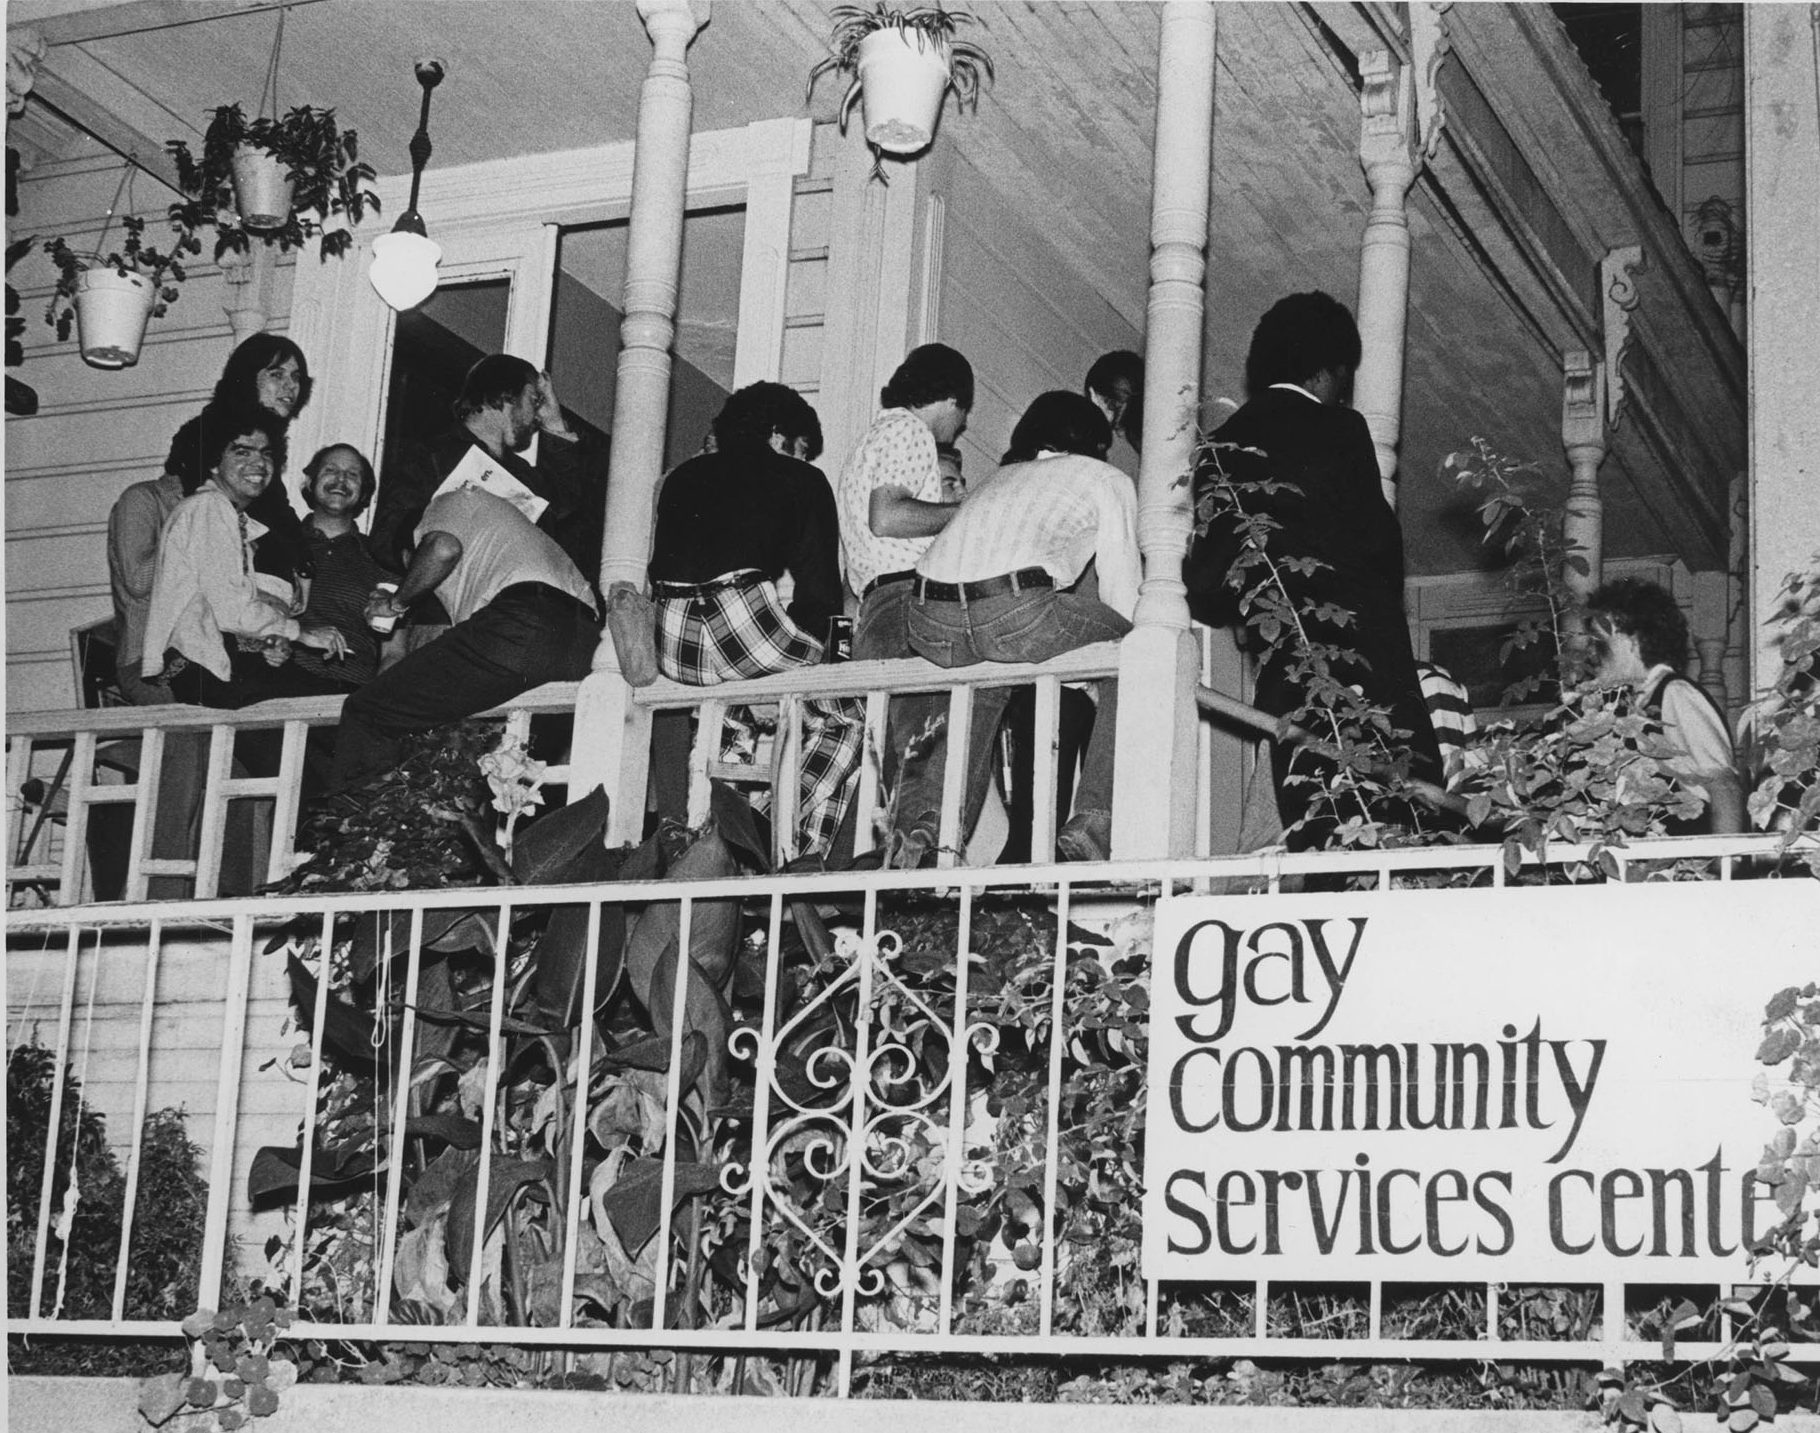 Seeding a gay community in LA, the gay liberation revolution